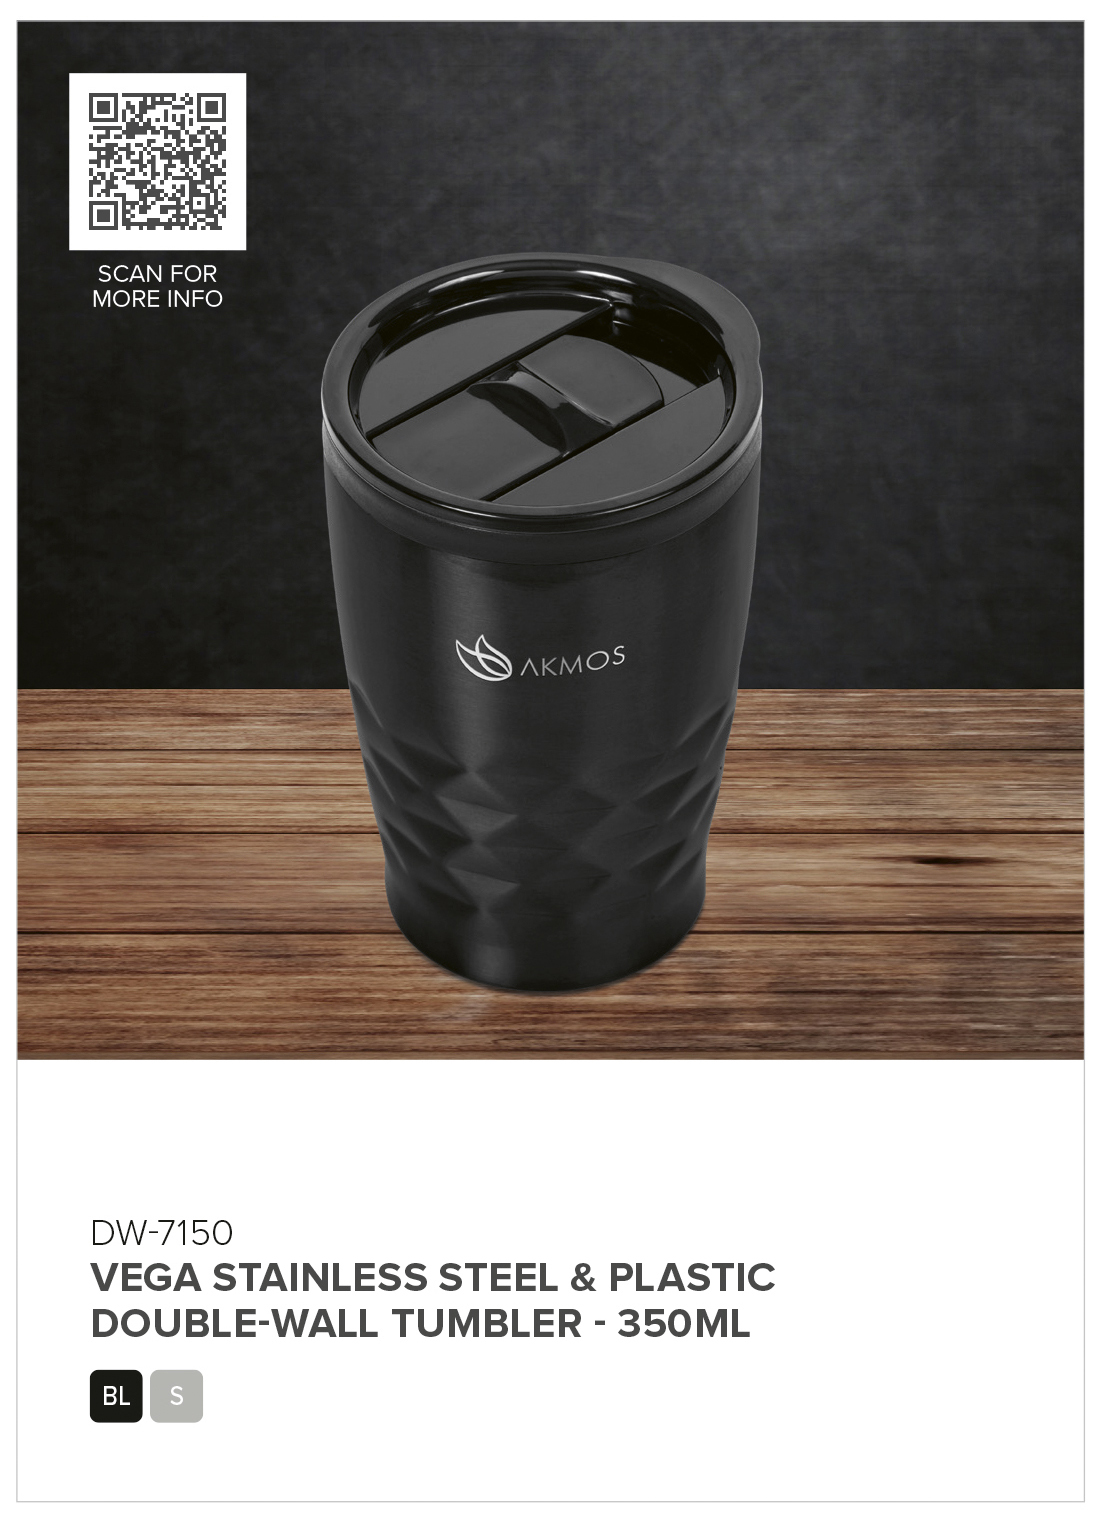 DW-7150 - Vega Stainless Steel & Plastic Double-Wall Tumbler  350ml - Catalogue Image